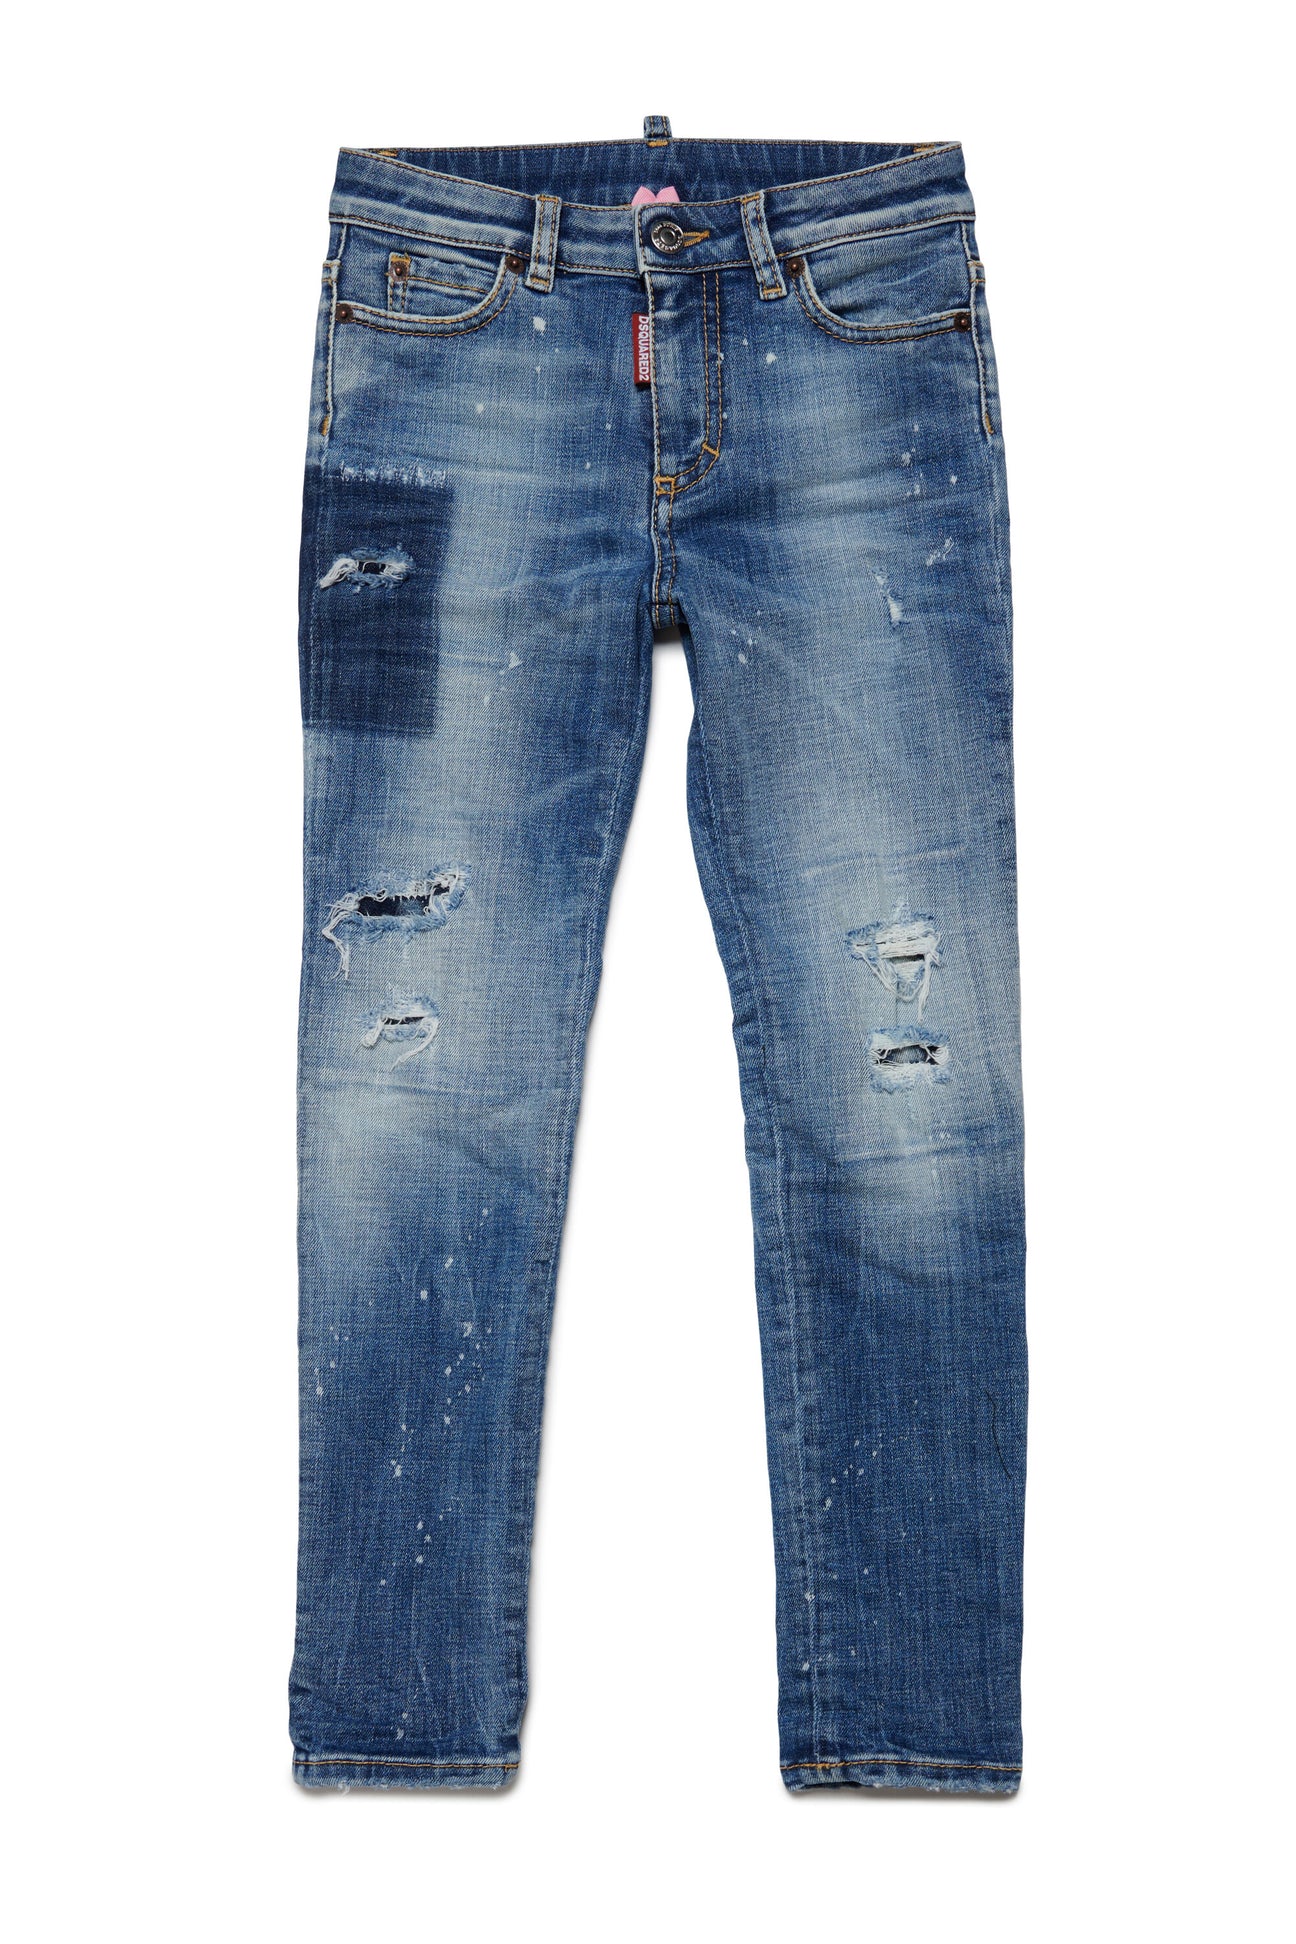 Shaded blue skinny jeans with breaks - Twiggy 